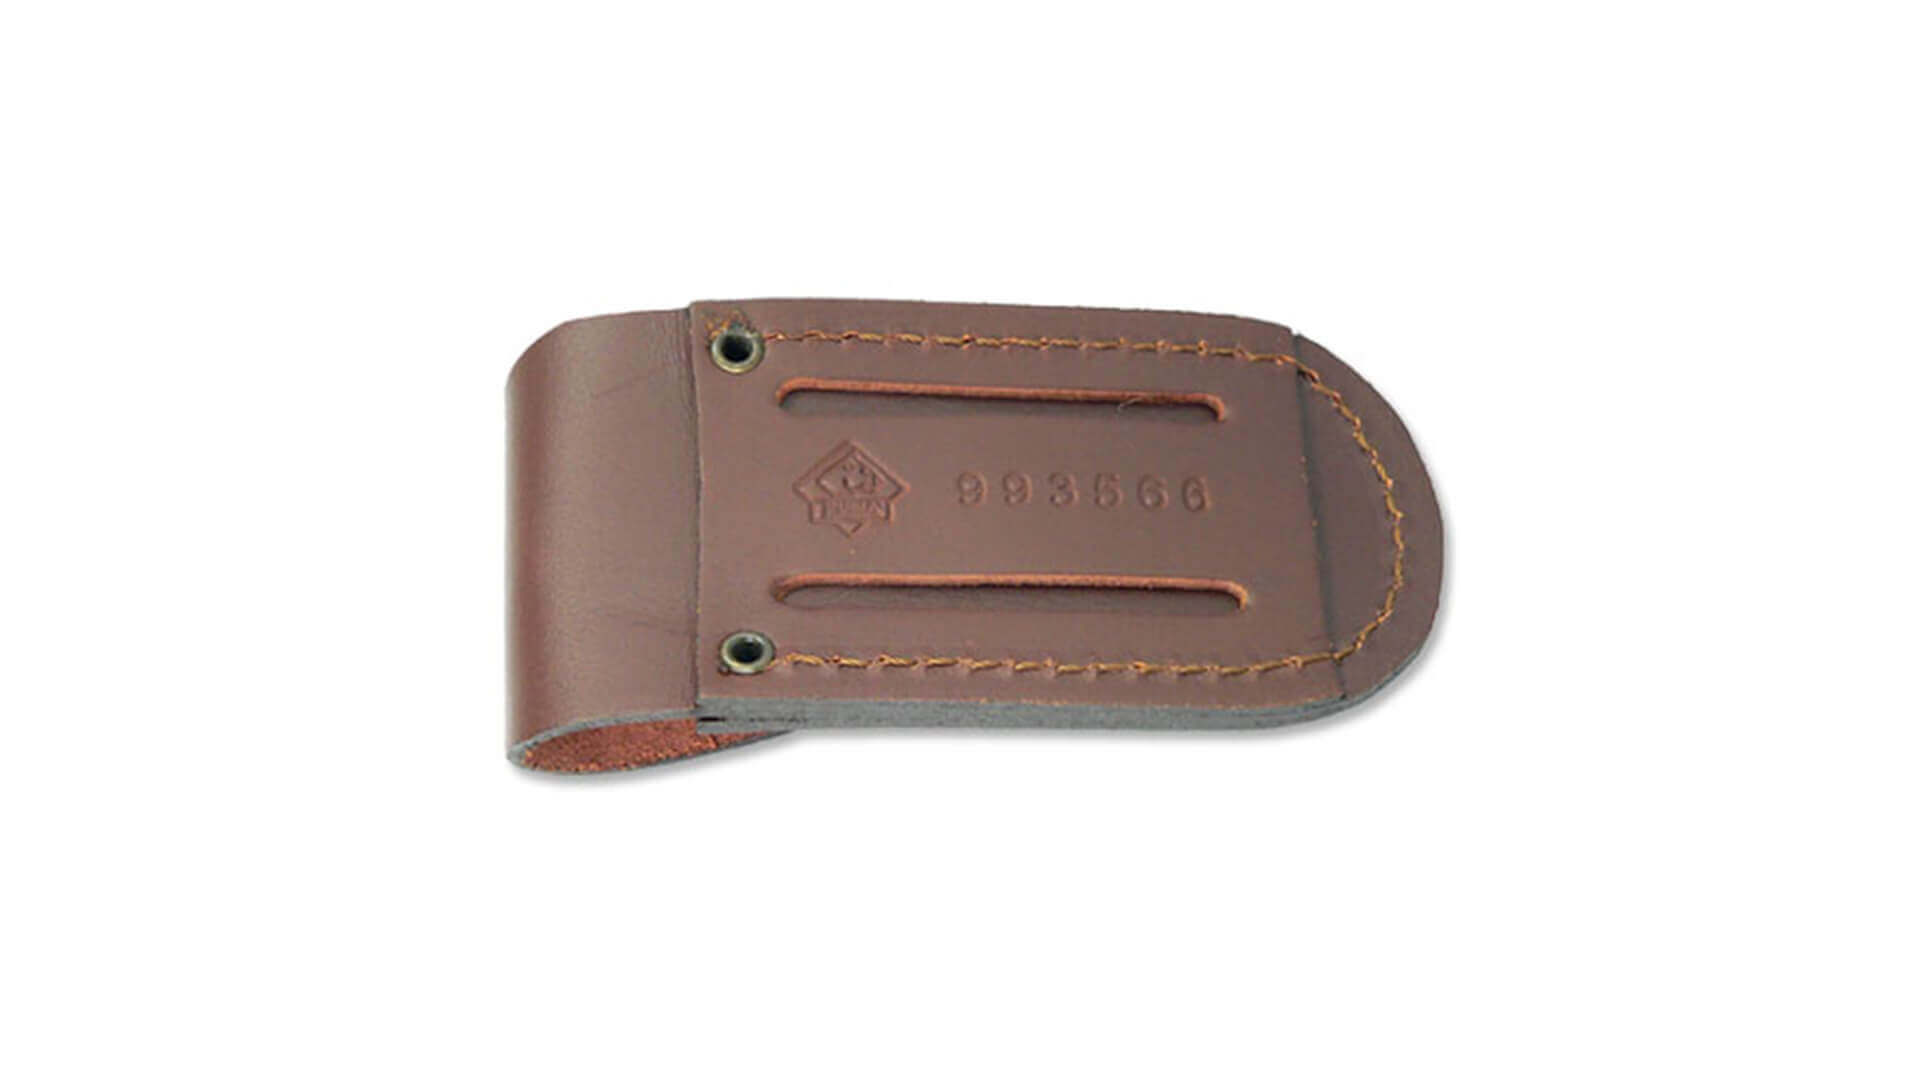 puma-belt-pouch-knife-brown-rear view-993566